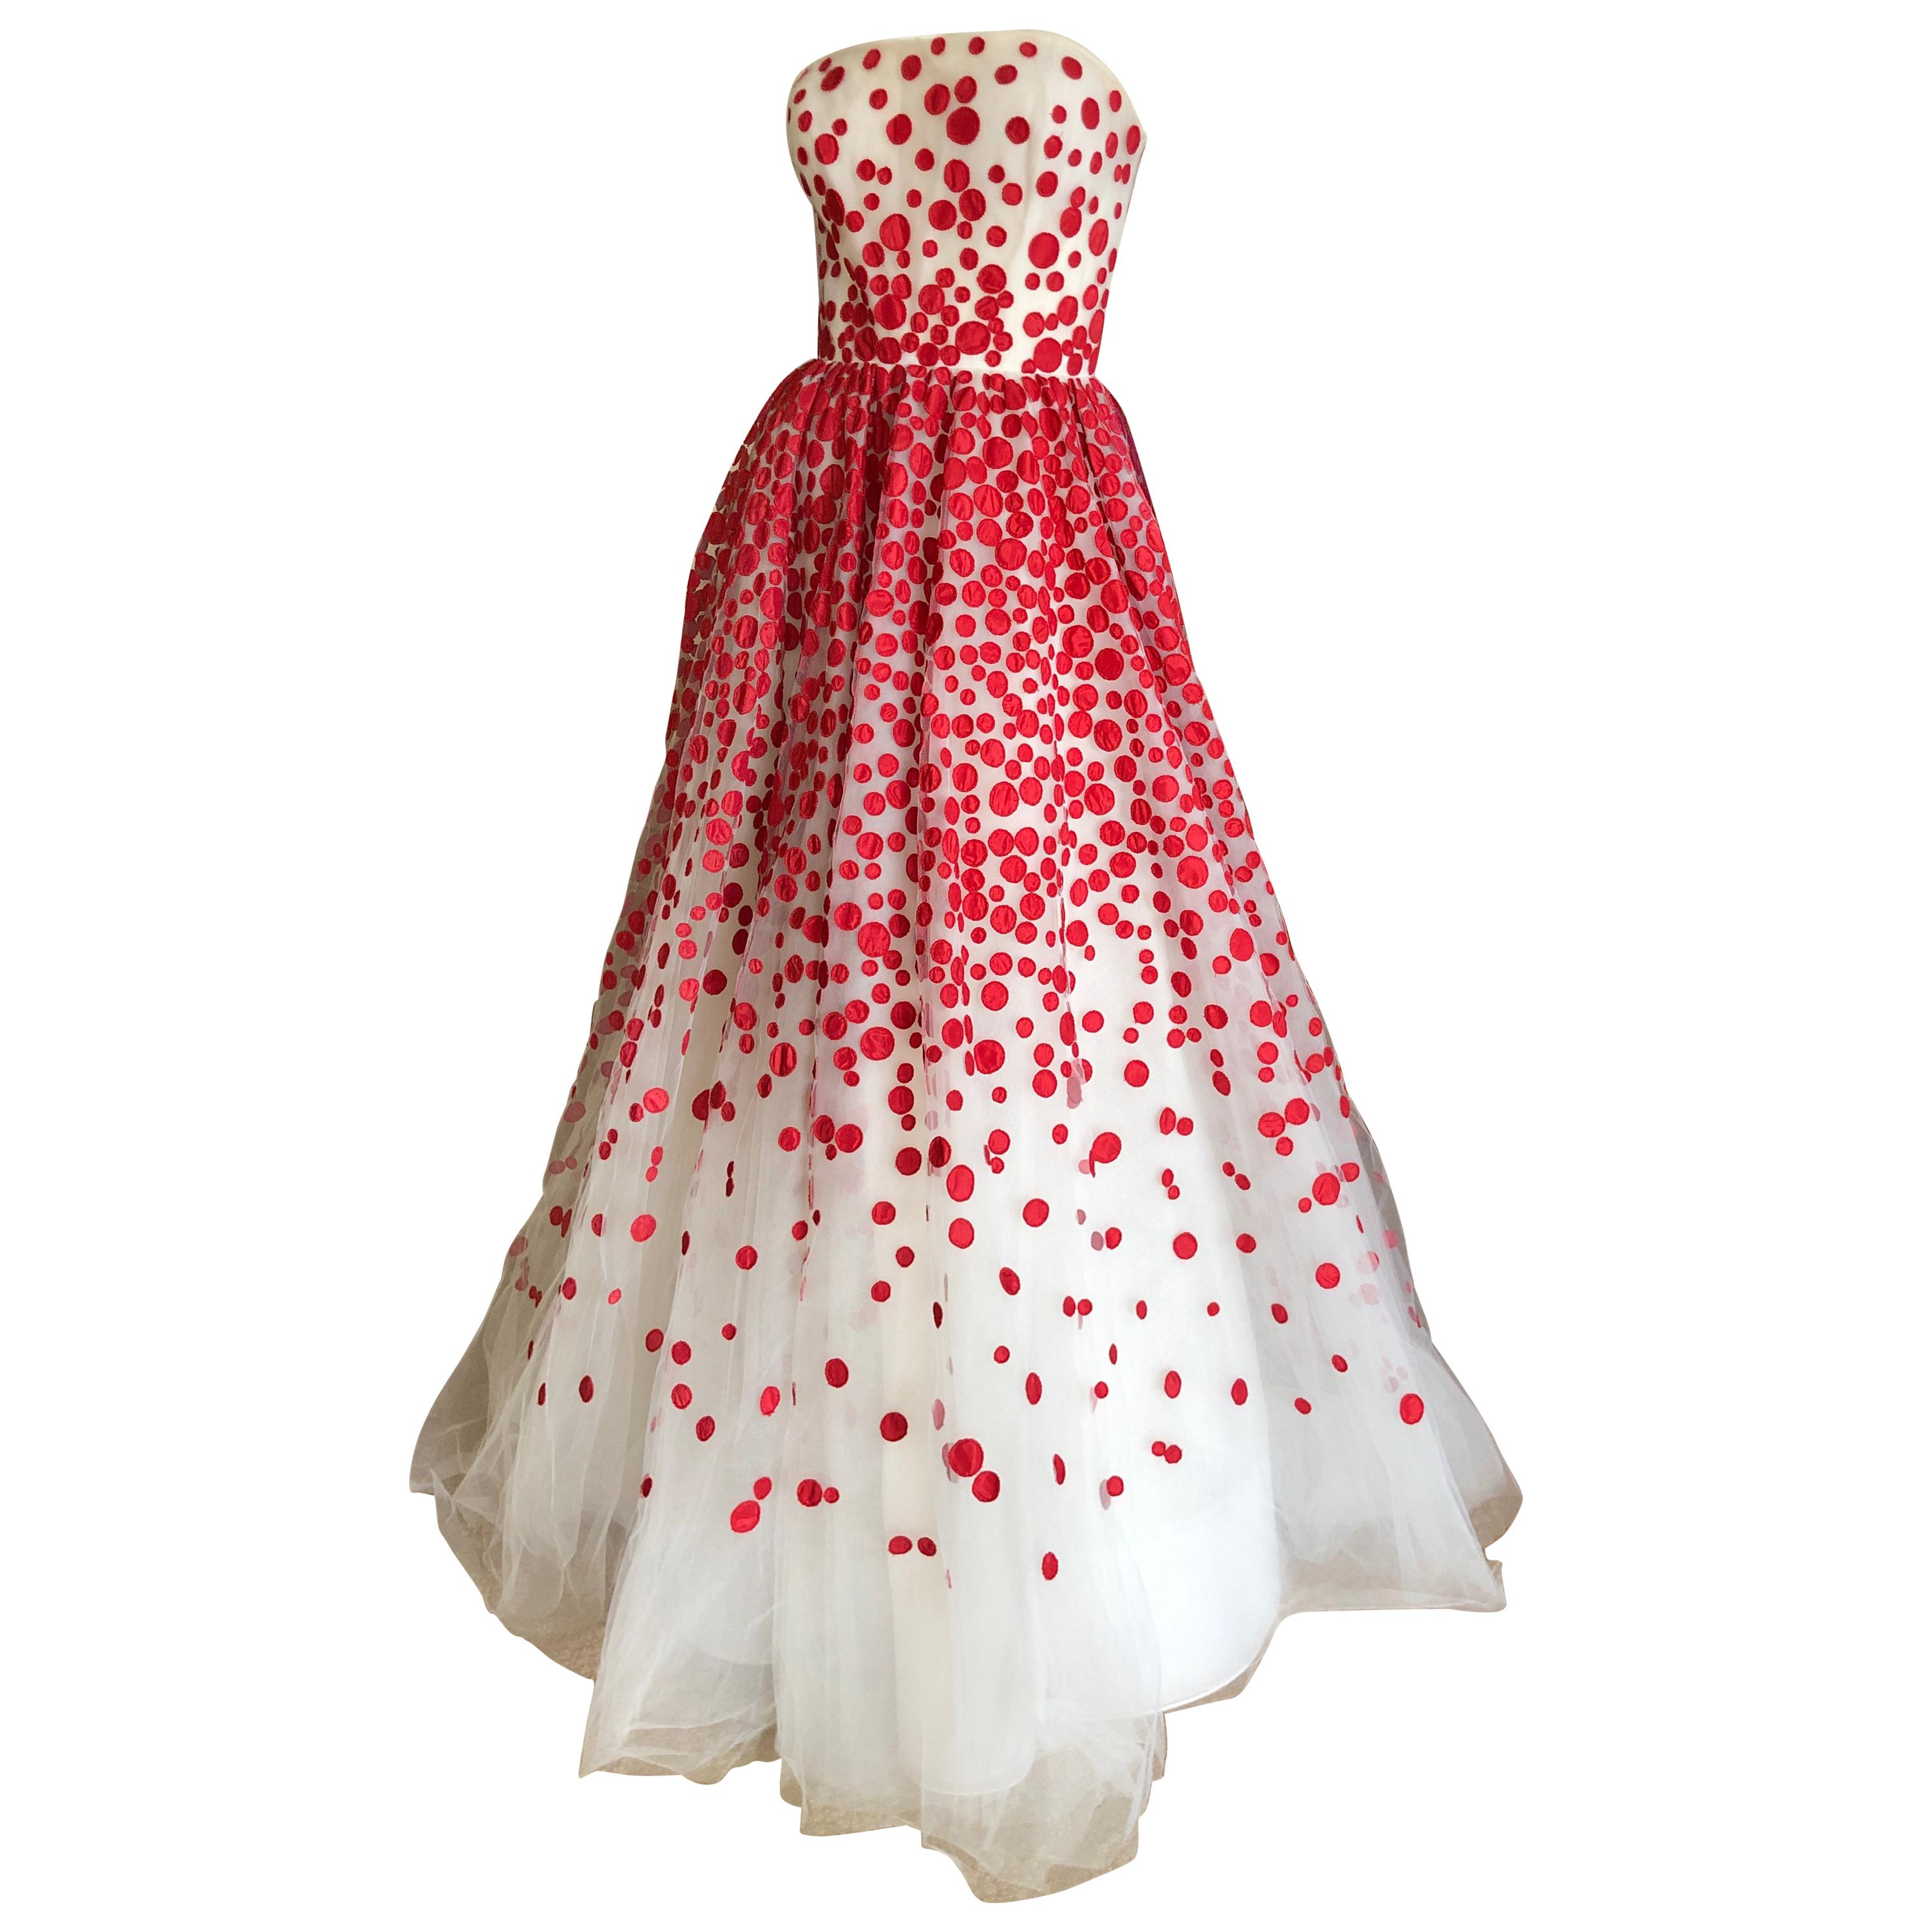 Oscar de la Renta White Tulle Polka Dot Evening Gown in Hard to Find Size 12